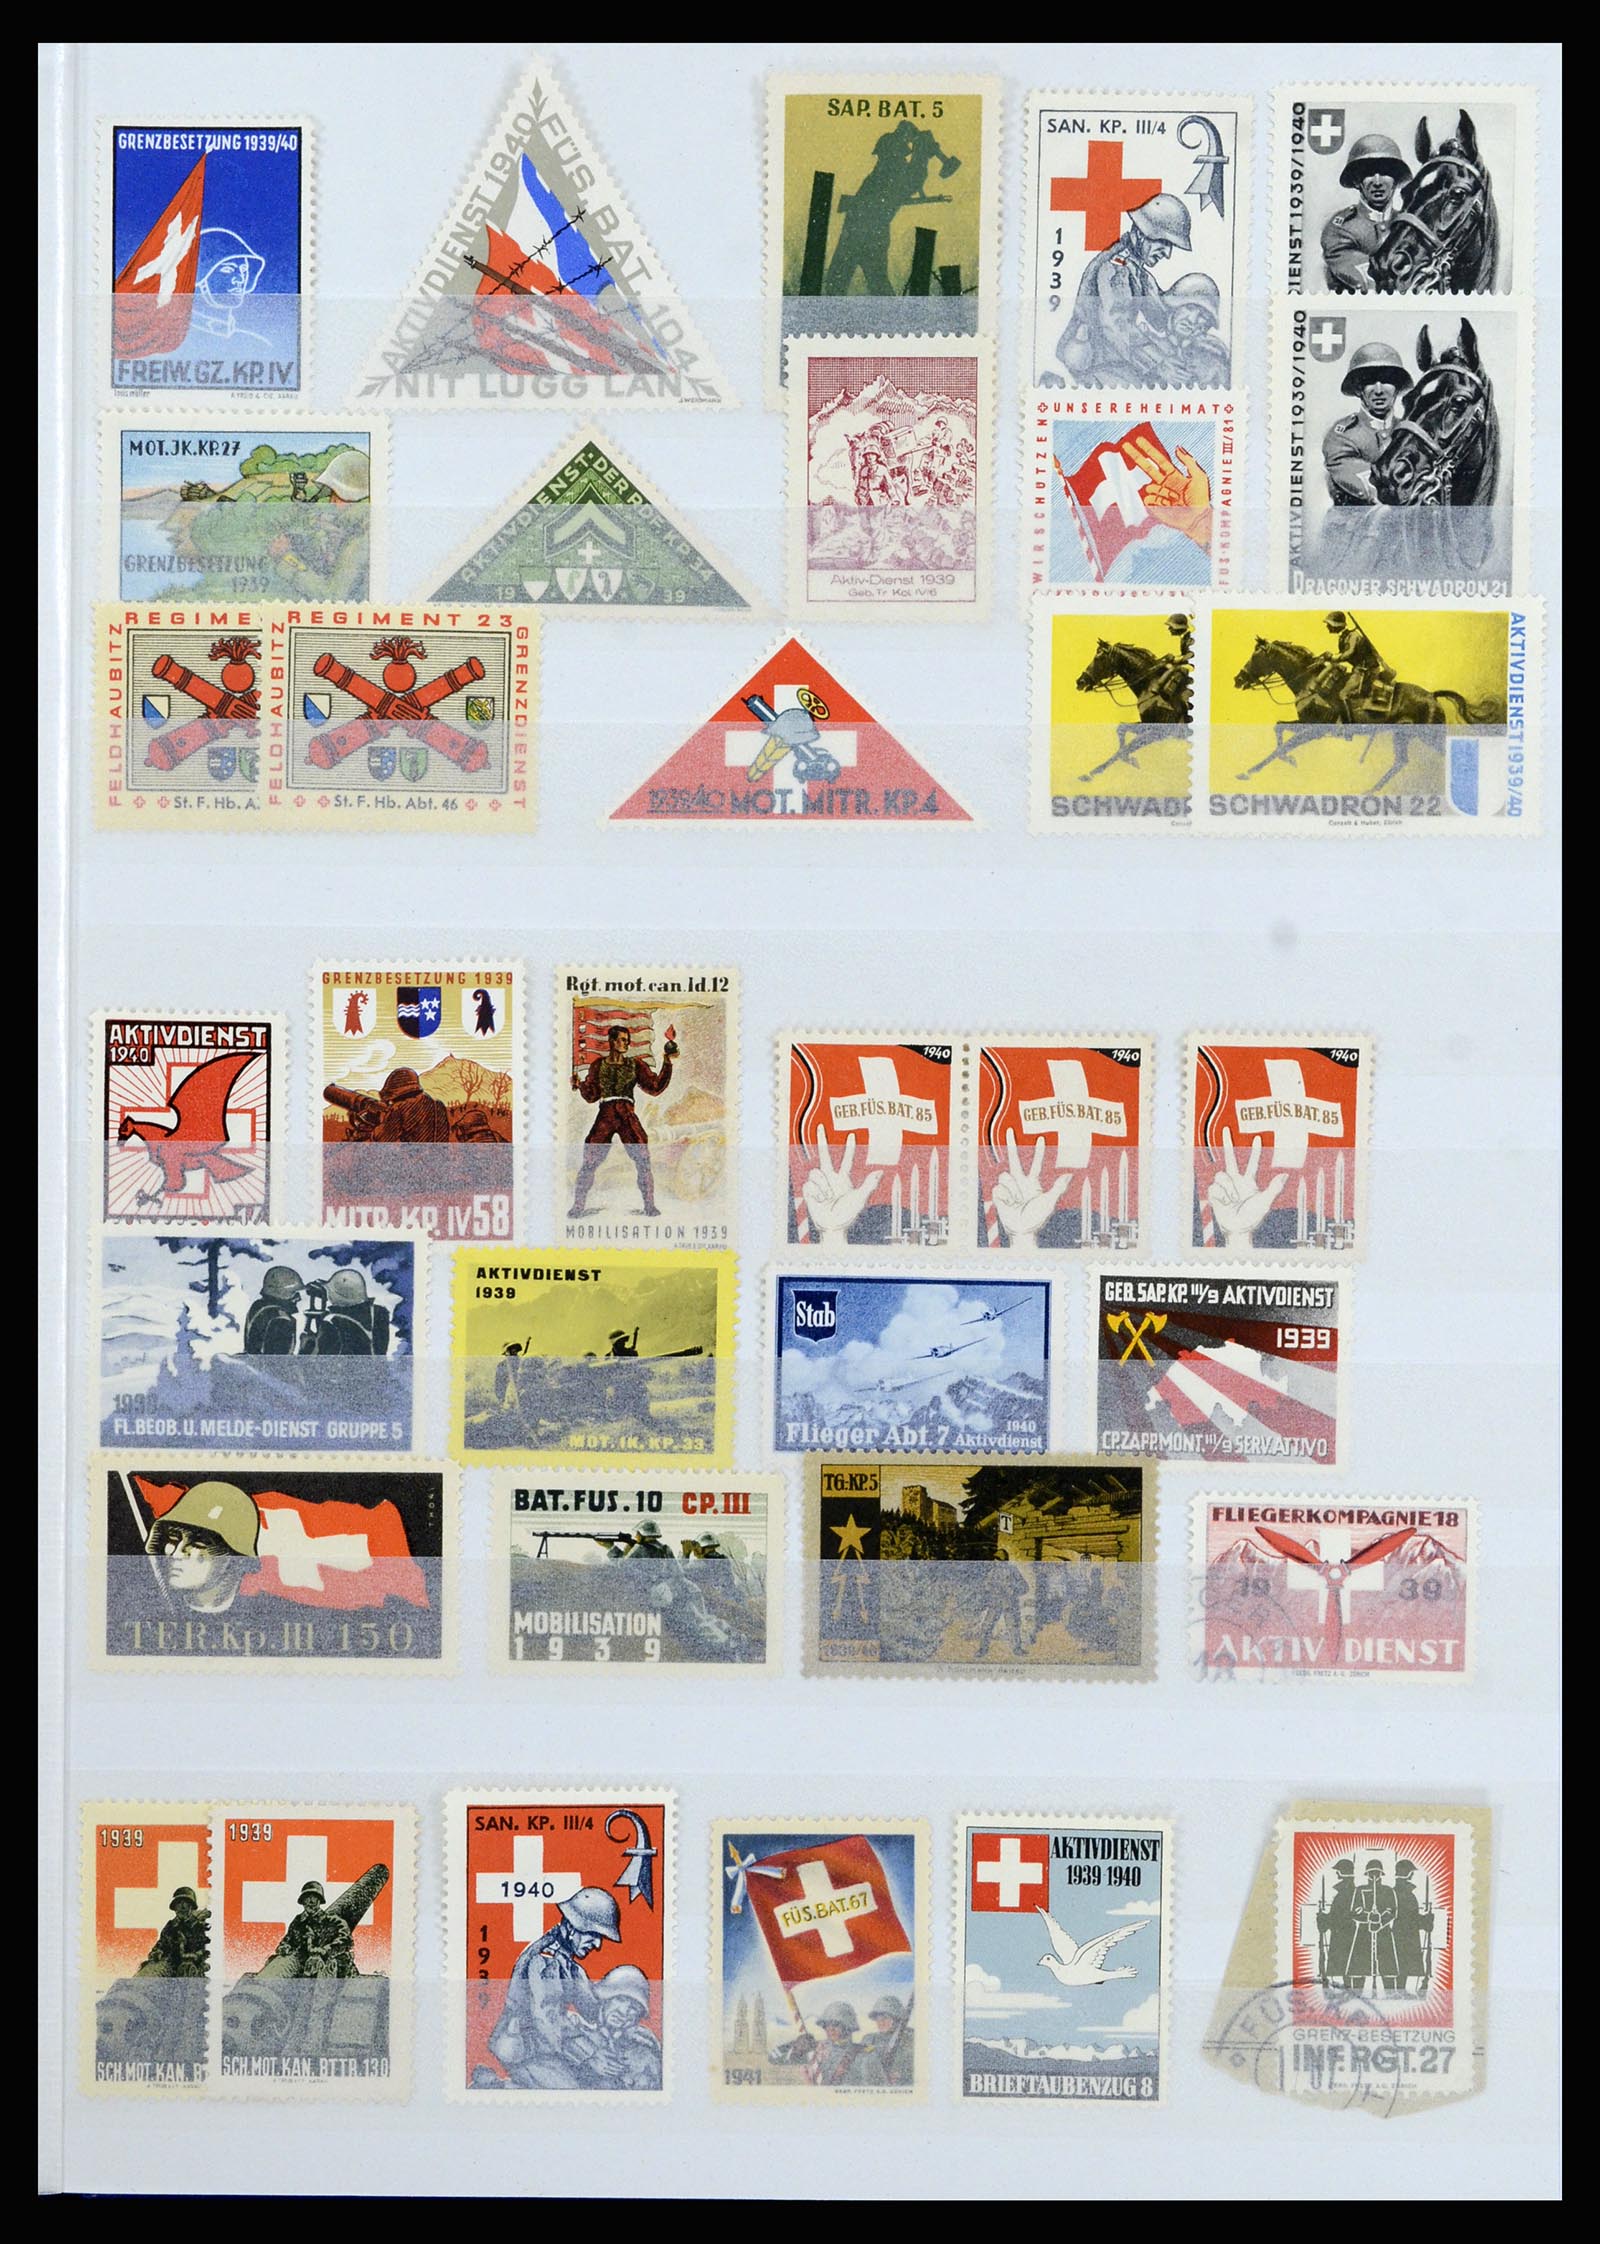 37149 017 - Stamp collection 37149 Switzerland soldier stamps 1914-1945.